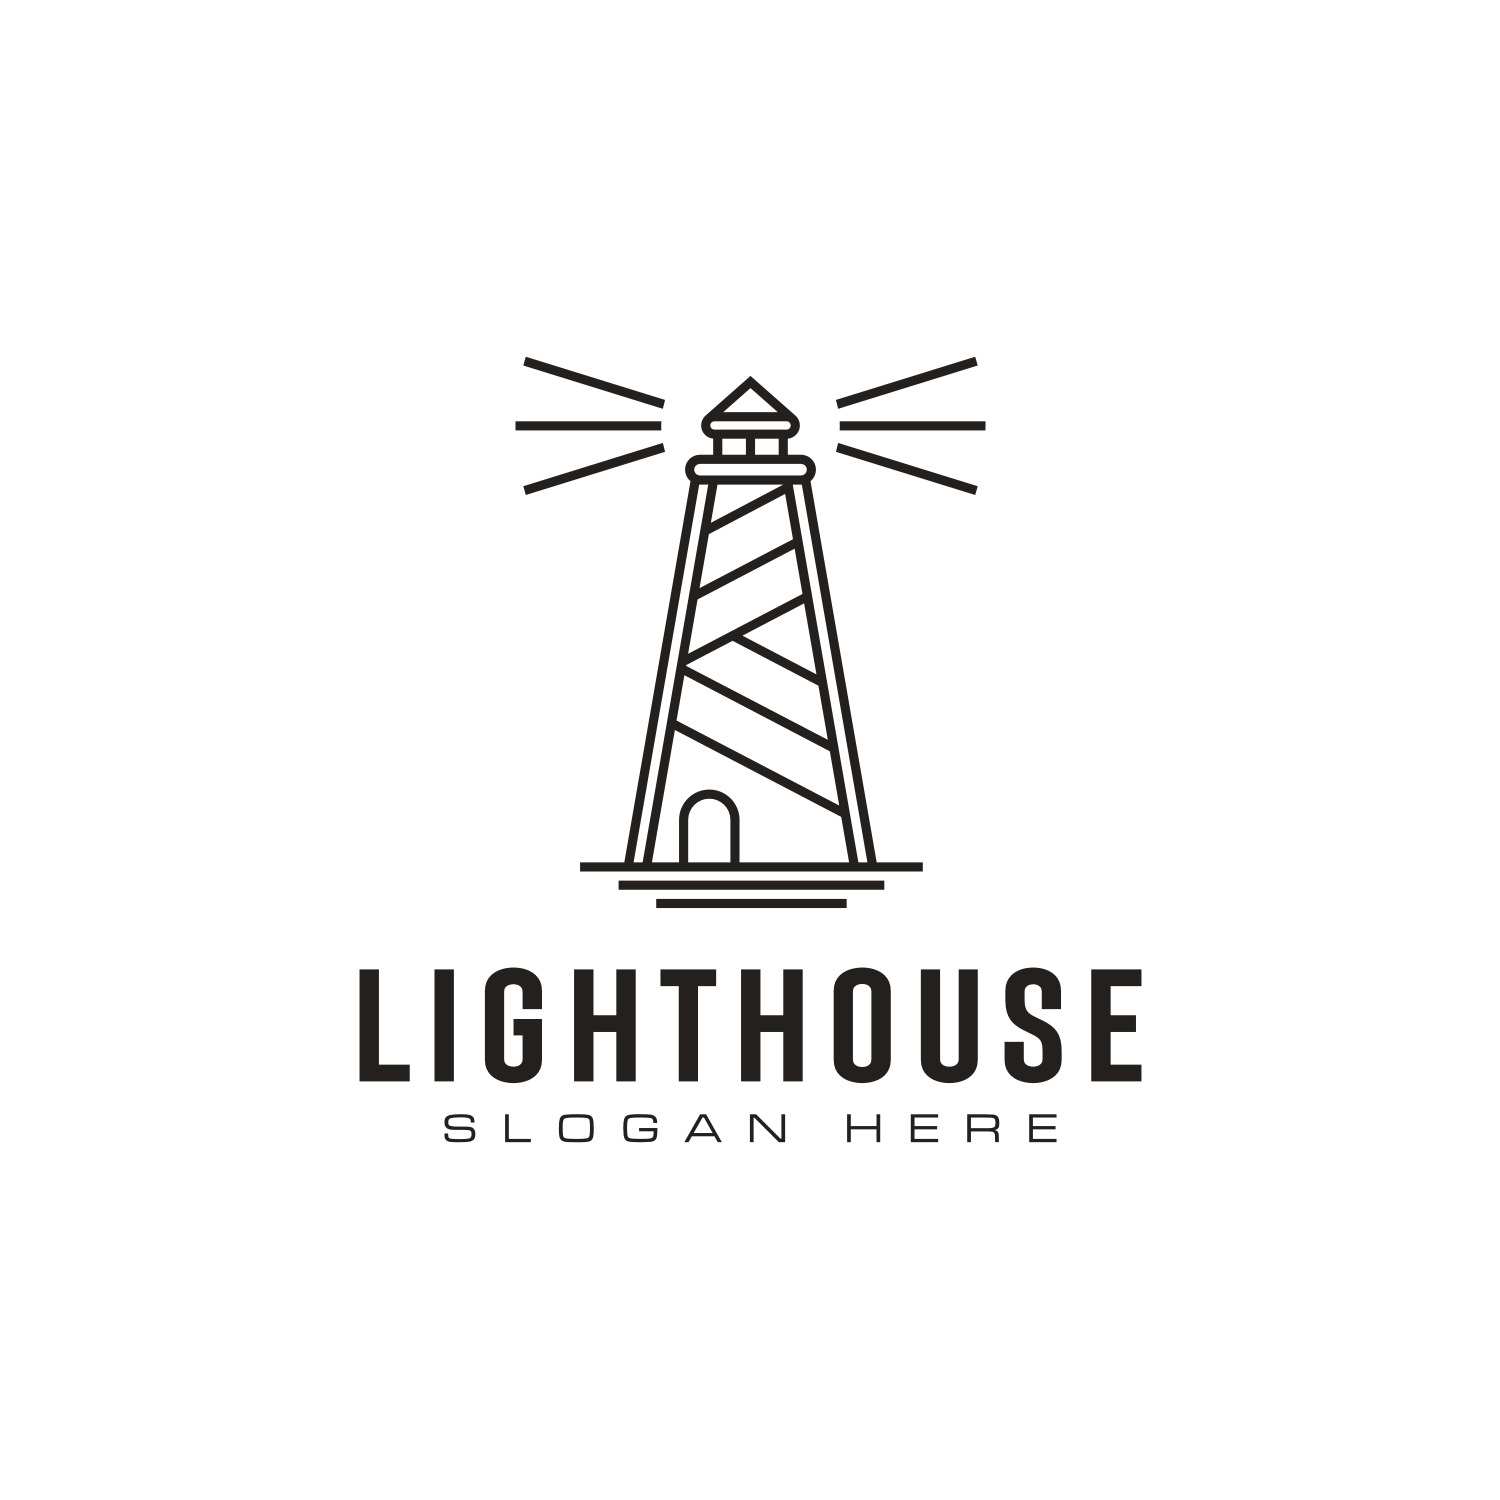 Set of Lighthouse Logo Vector Design in high resolution.